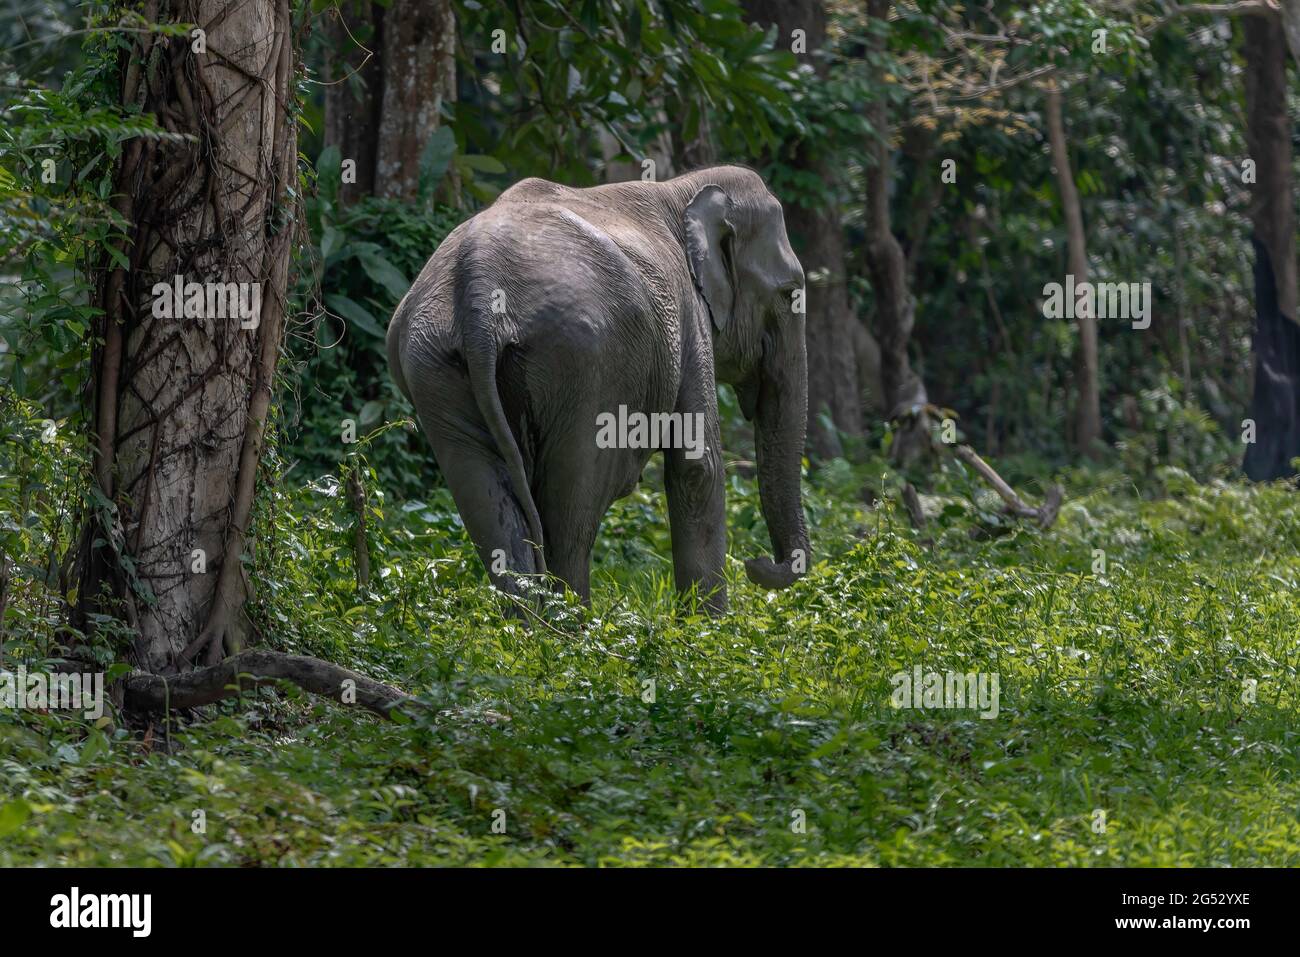 Wild elephants in the forest of Kaziranga National Park in Assam, India. Stock Photo